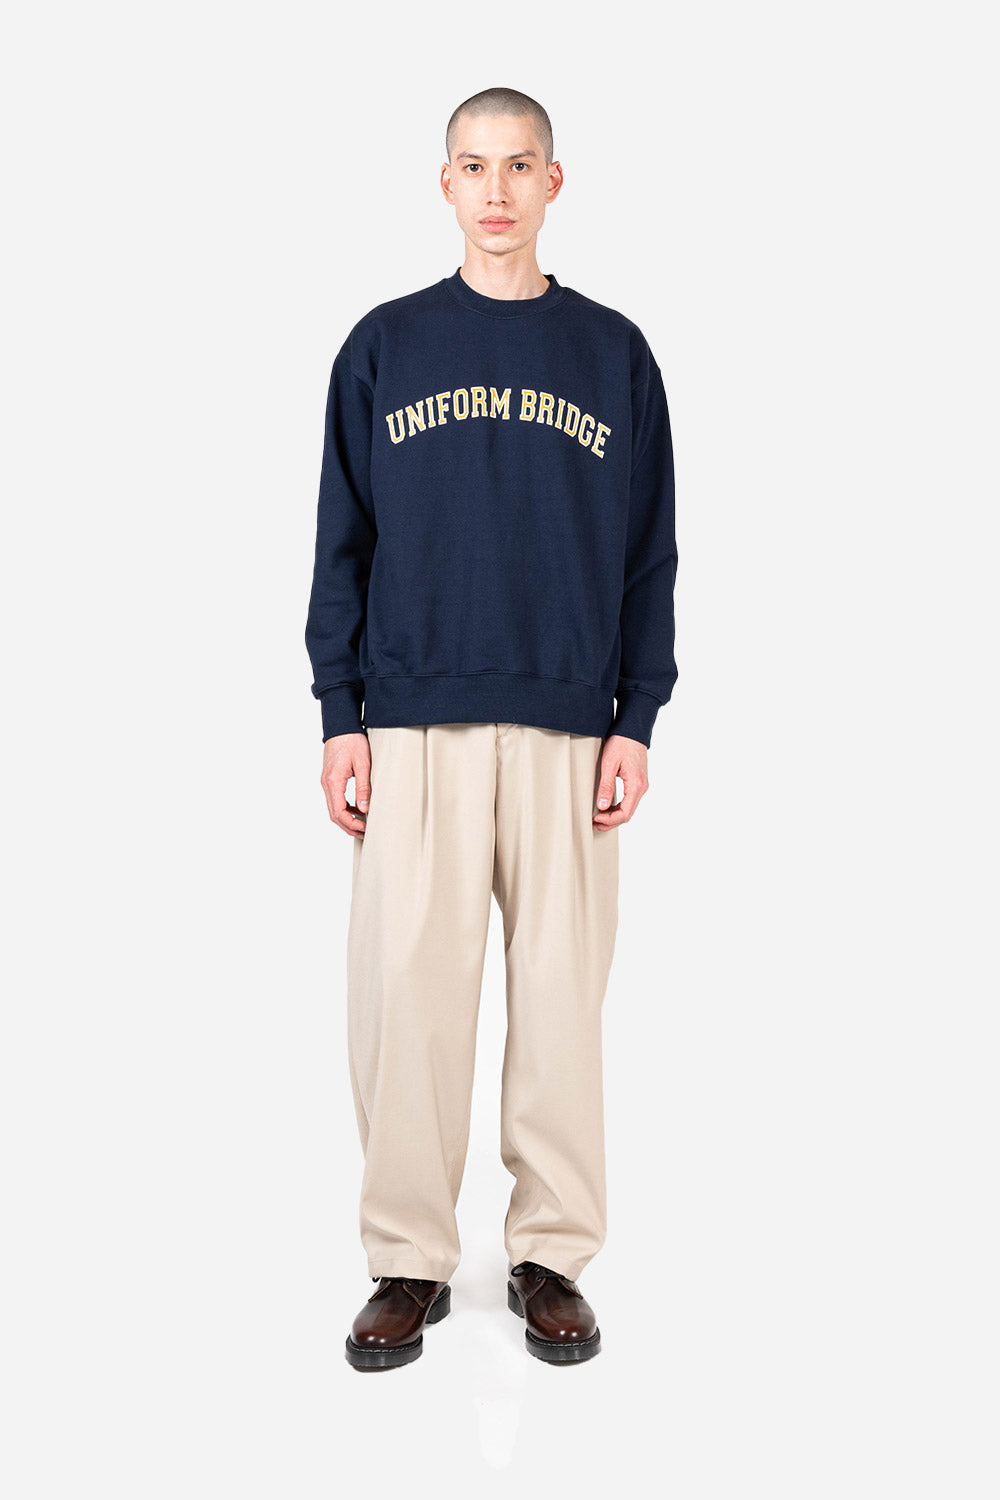 uniform-bridge-arch-logo-sweatshirt-navy